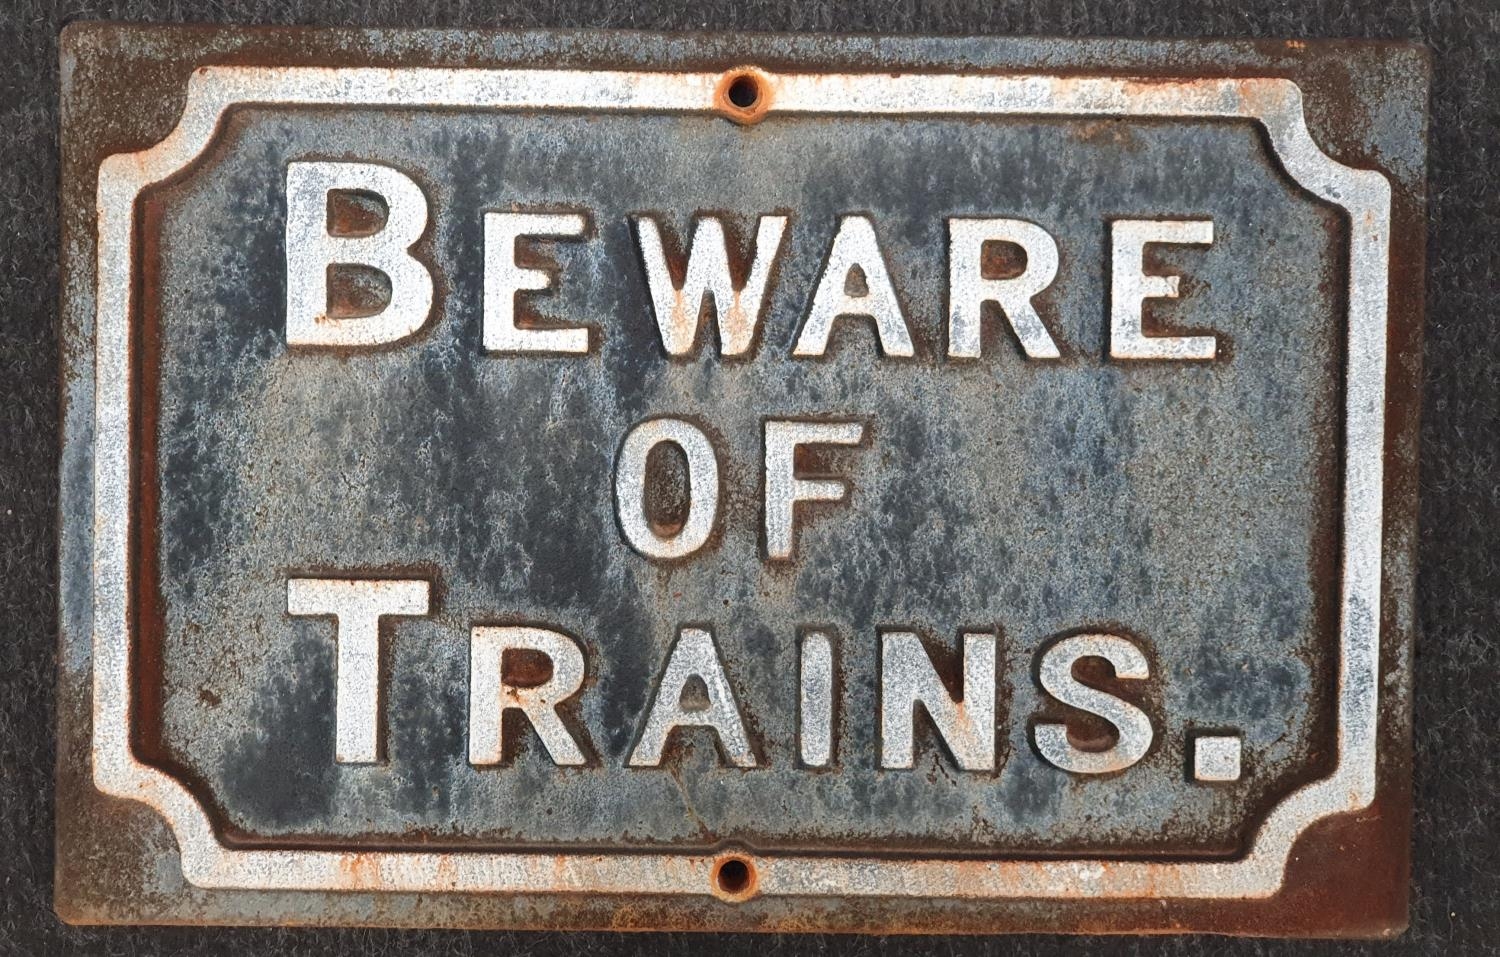 "Beware of Trains" cast metal sign 21x31cm.